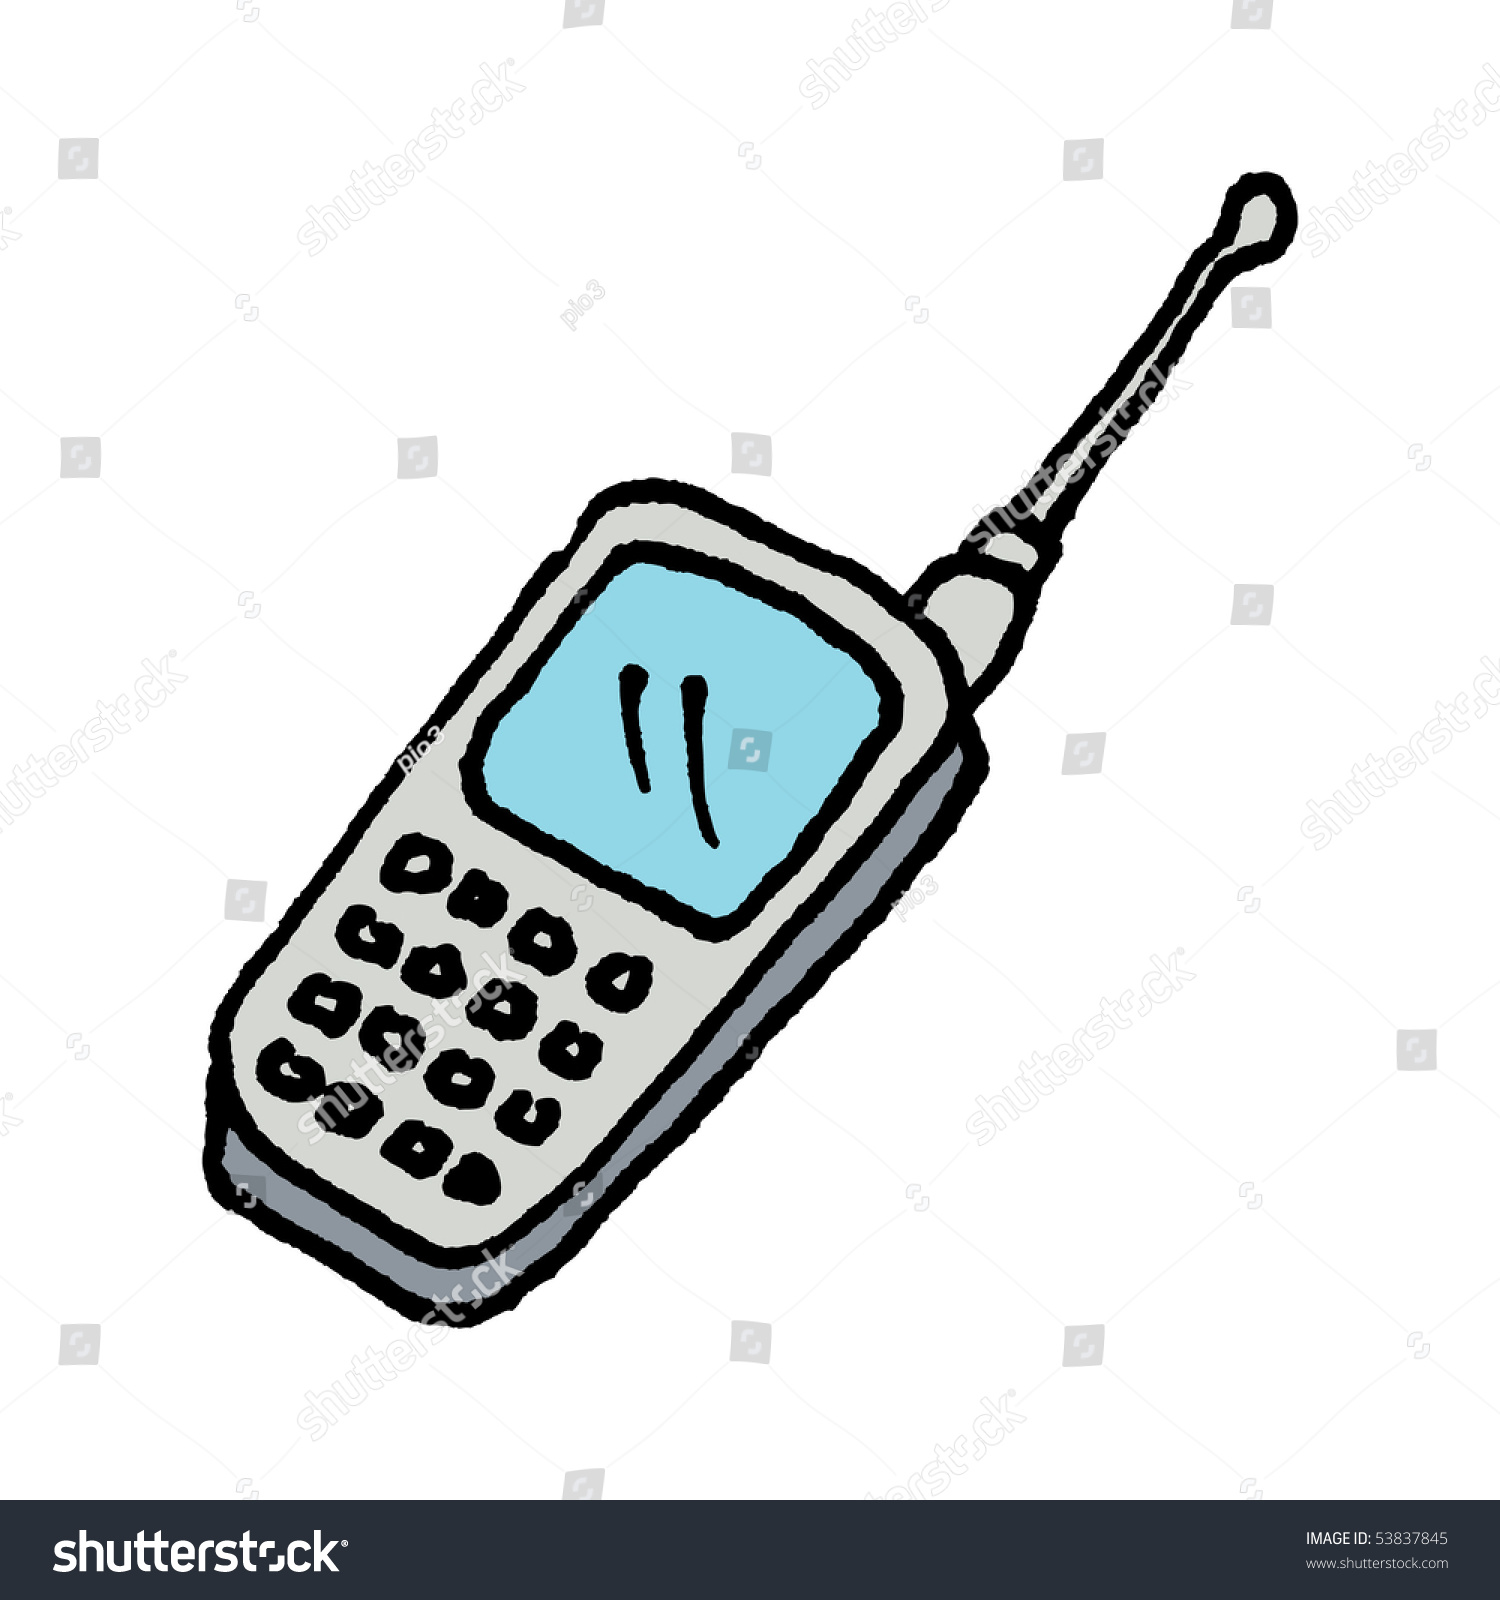 Cell Phone Sketch Vector Stock Vector 53837845 - Shutterstock